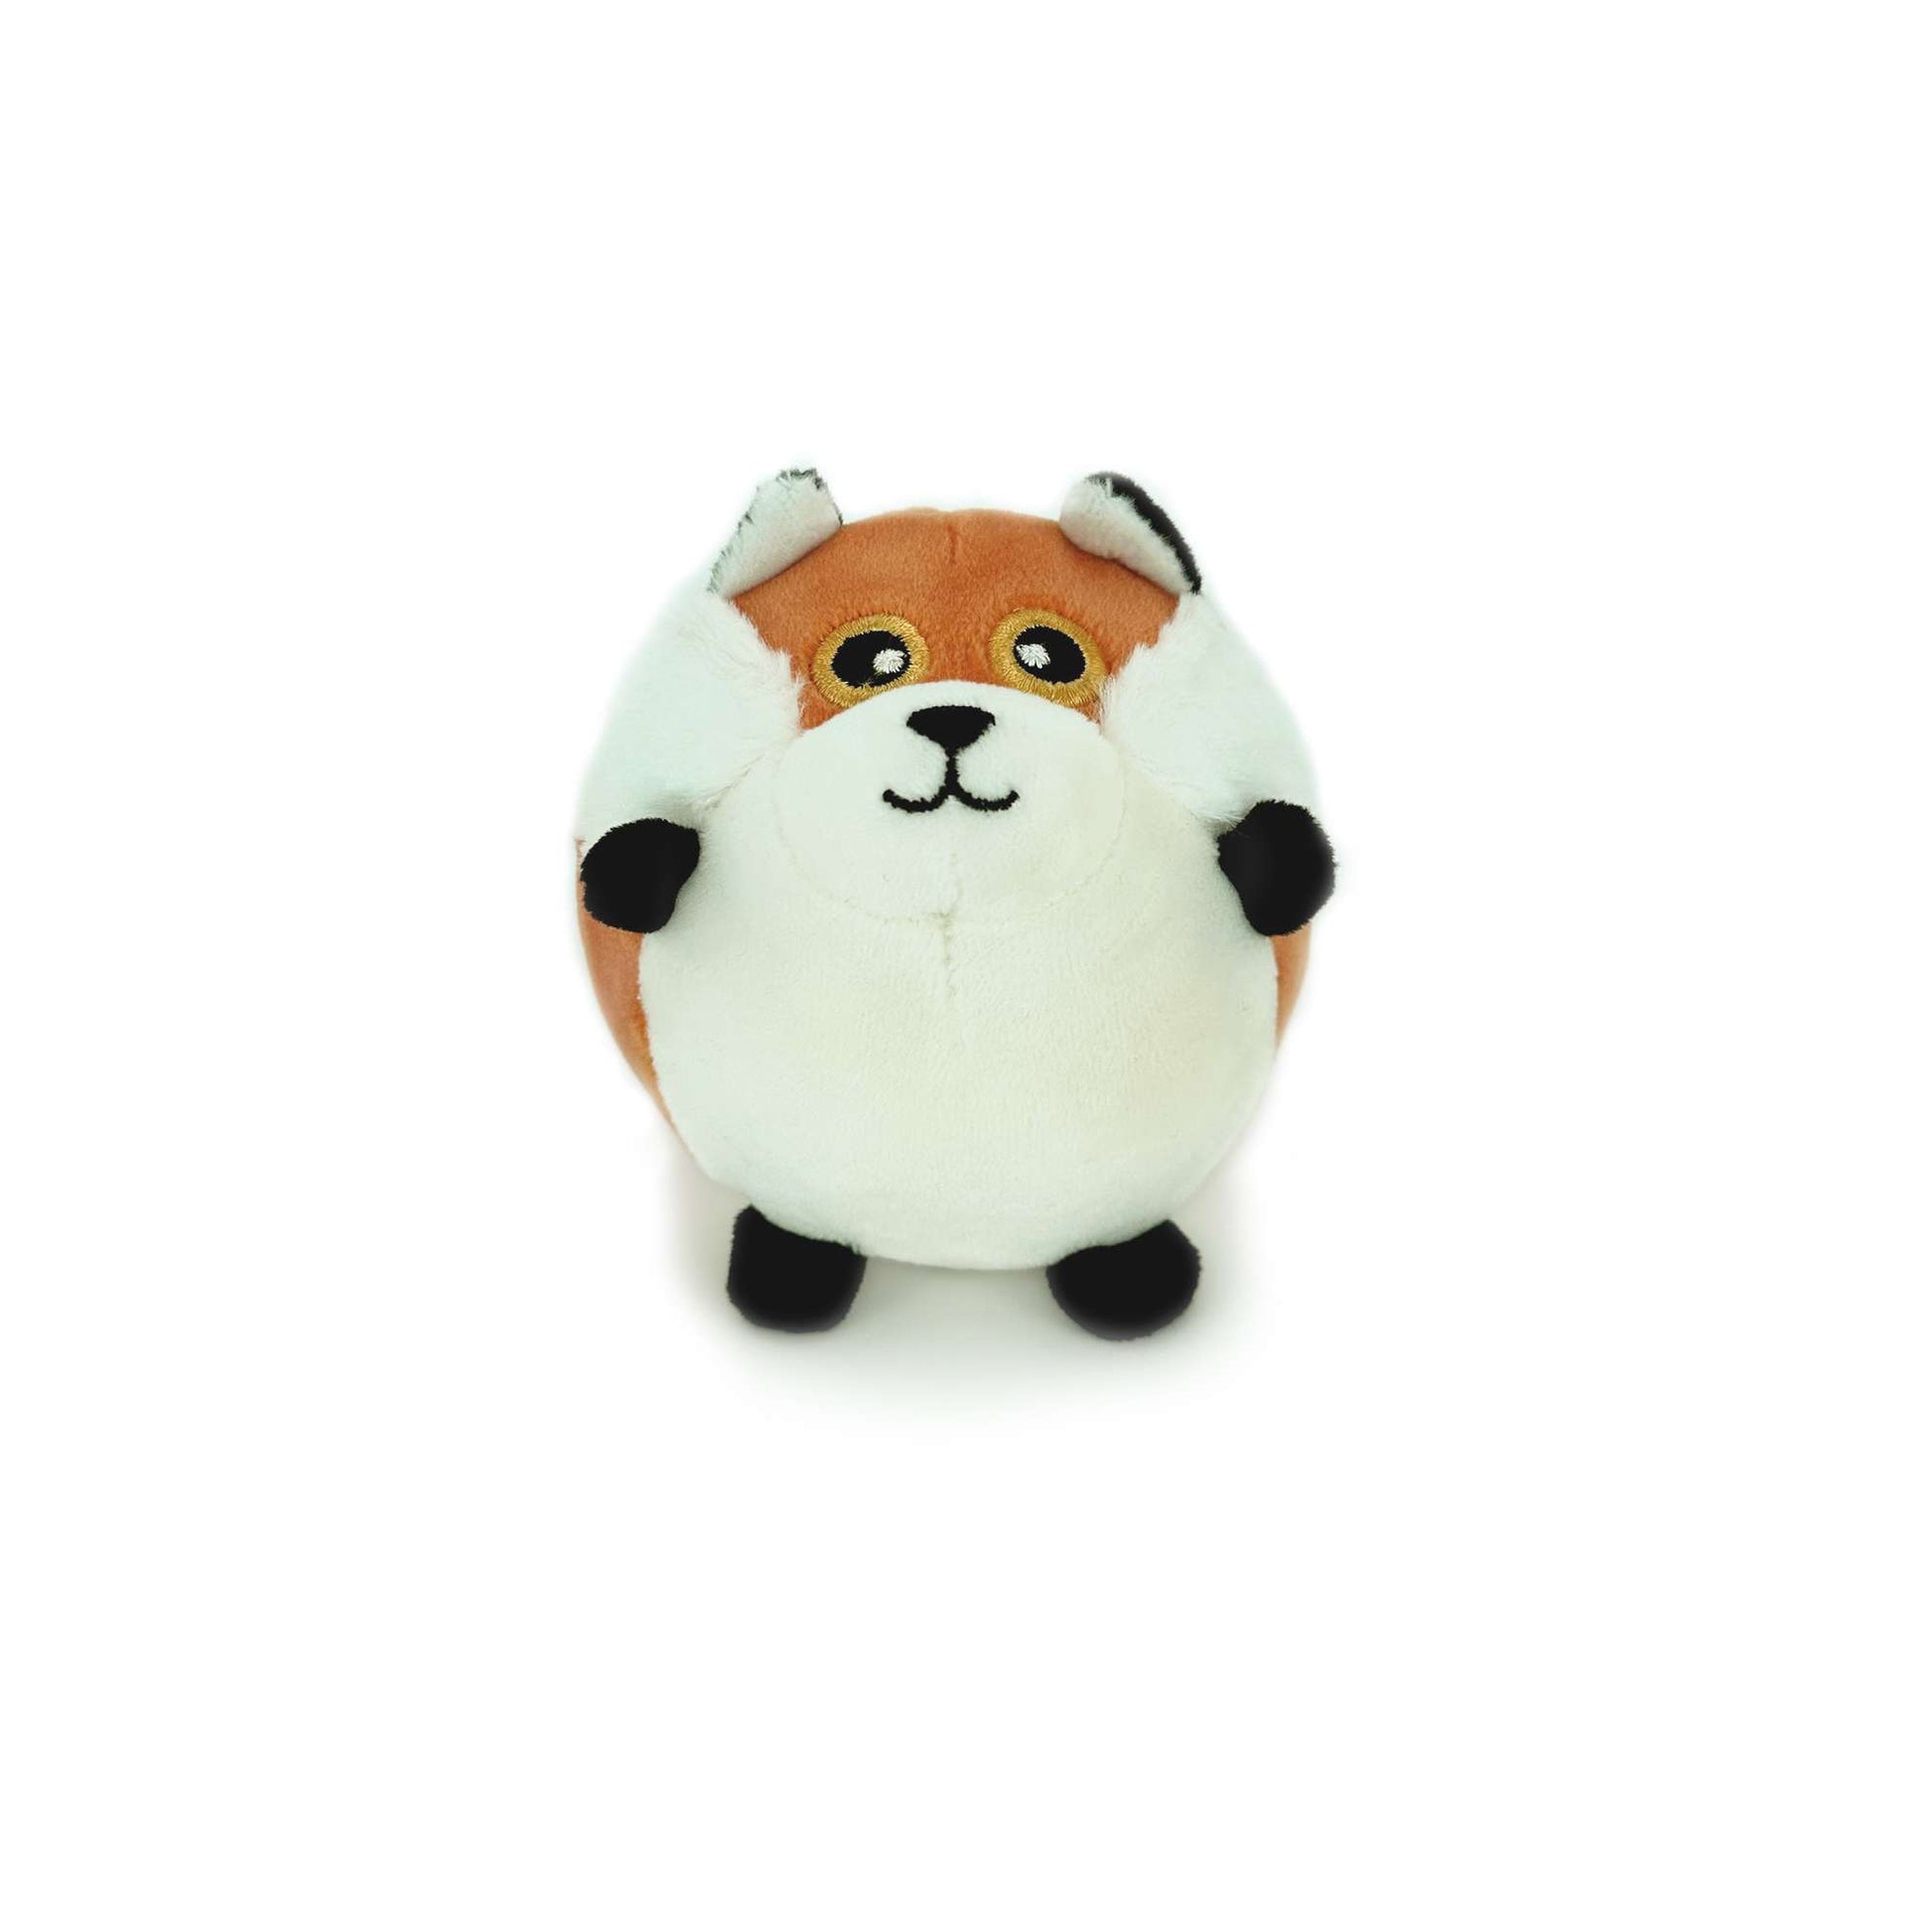 Chubby cartoon fox plush toy